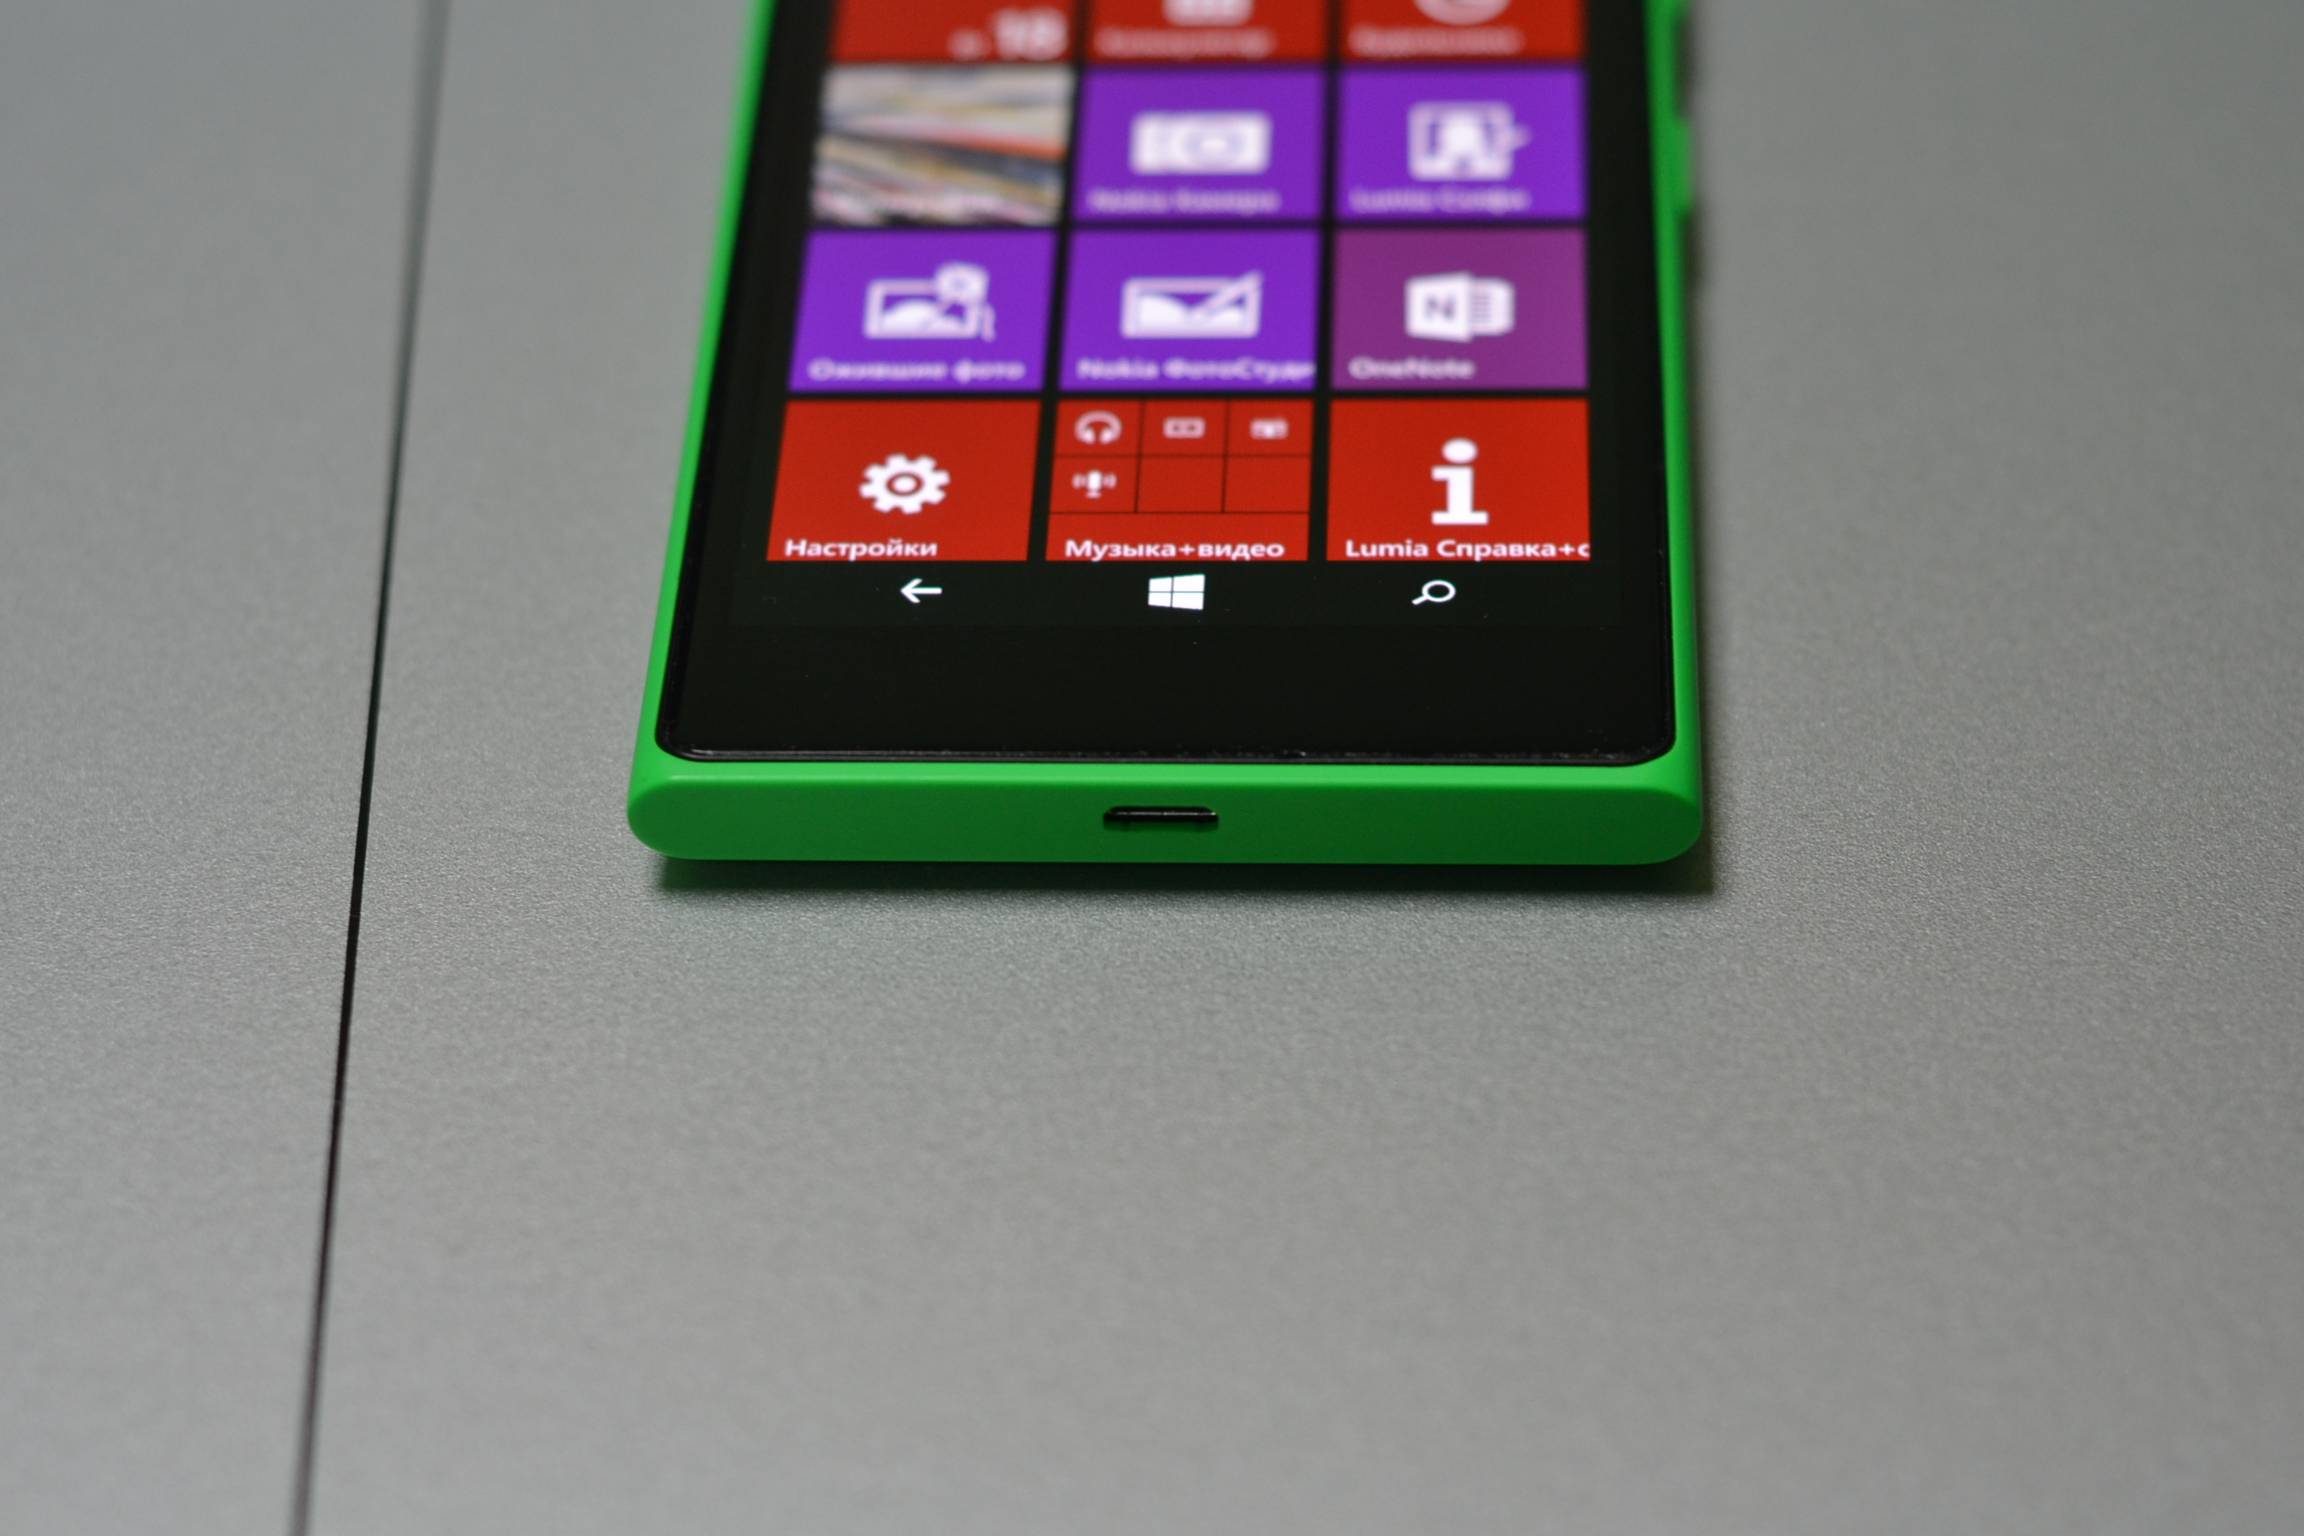 Nokia lumia 730 review - phonearena